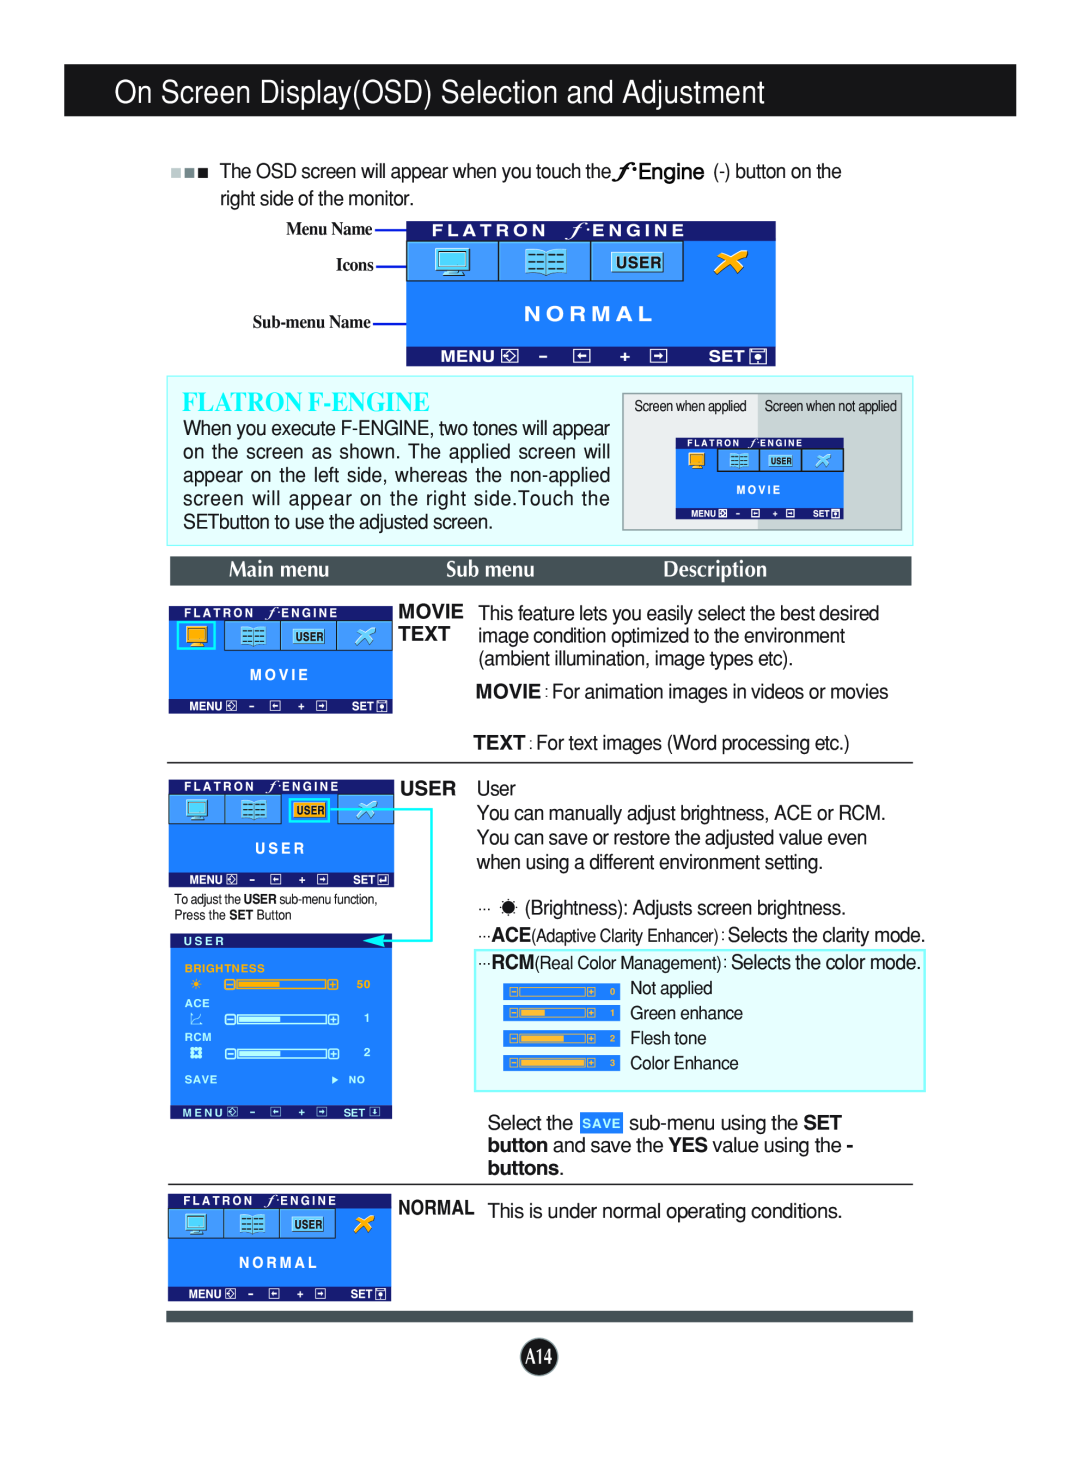 LG Electronics L1740P On Screen DisplayOSD Selection and Adjustment, Flatron F-Engine, Main menu, Sub menu, Description 